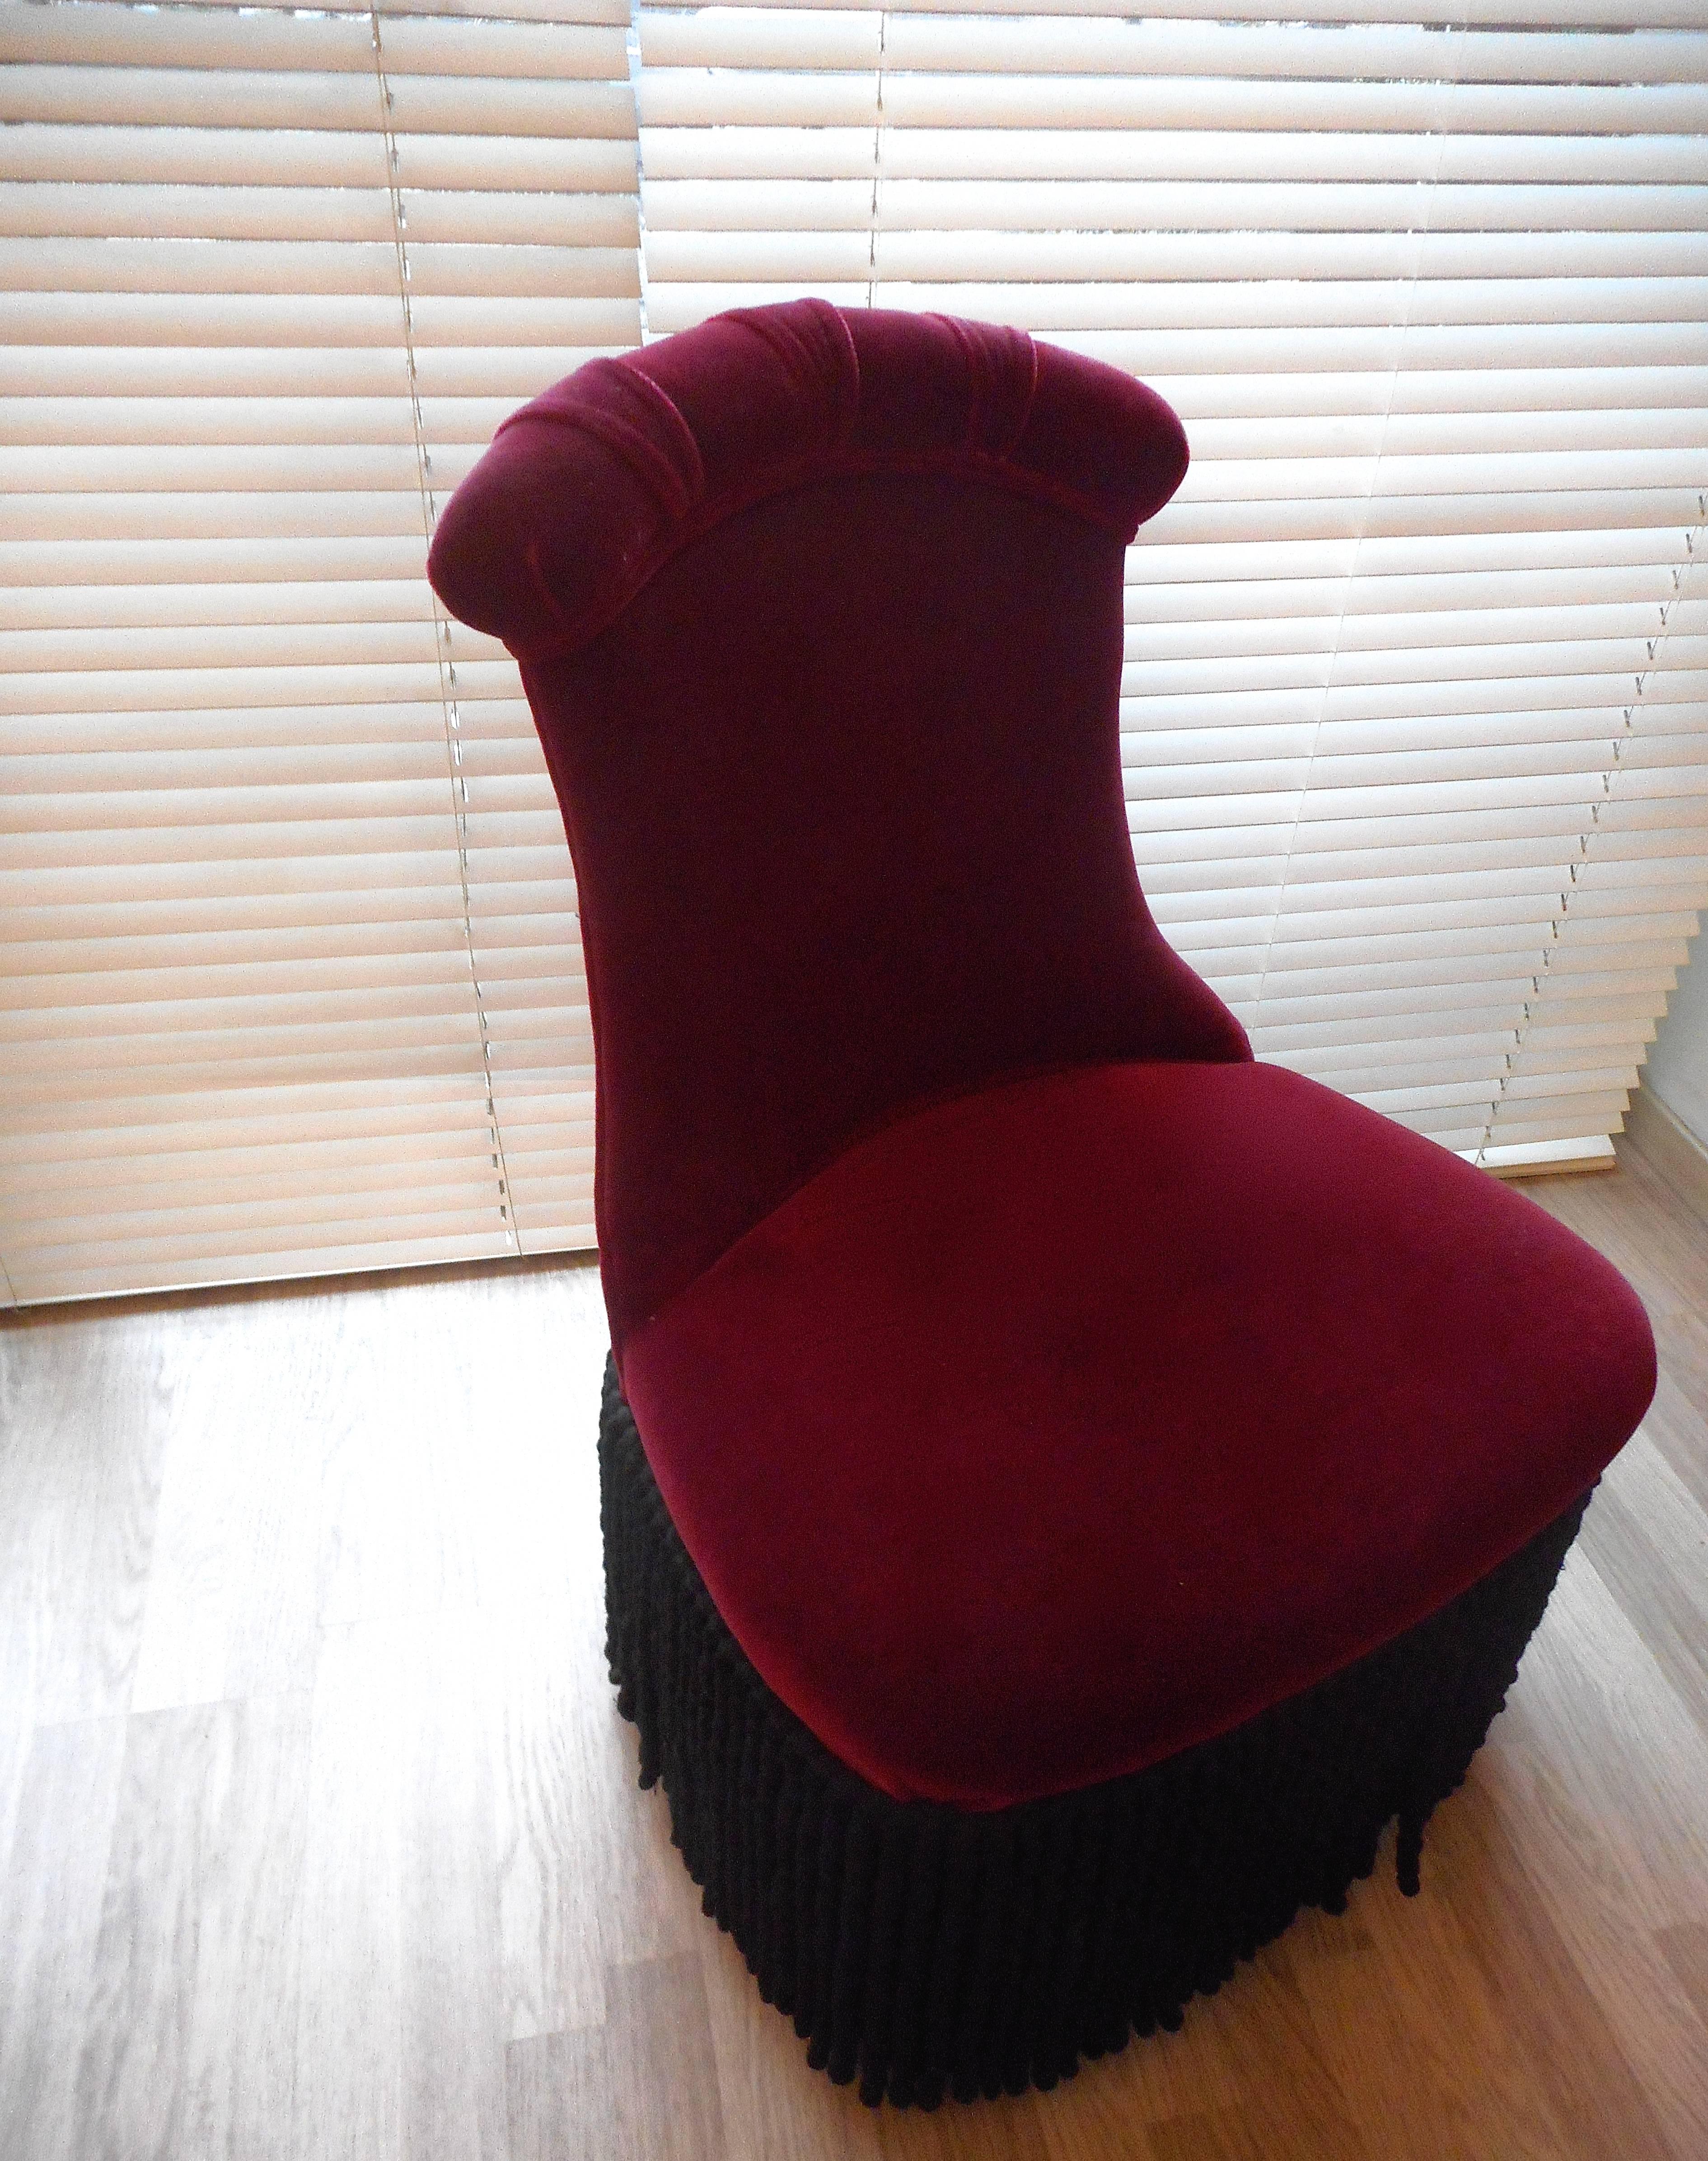 American 1940s Red Velvet Chair by Dorothy Draper for The Fairmount in S.F. For Sale